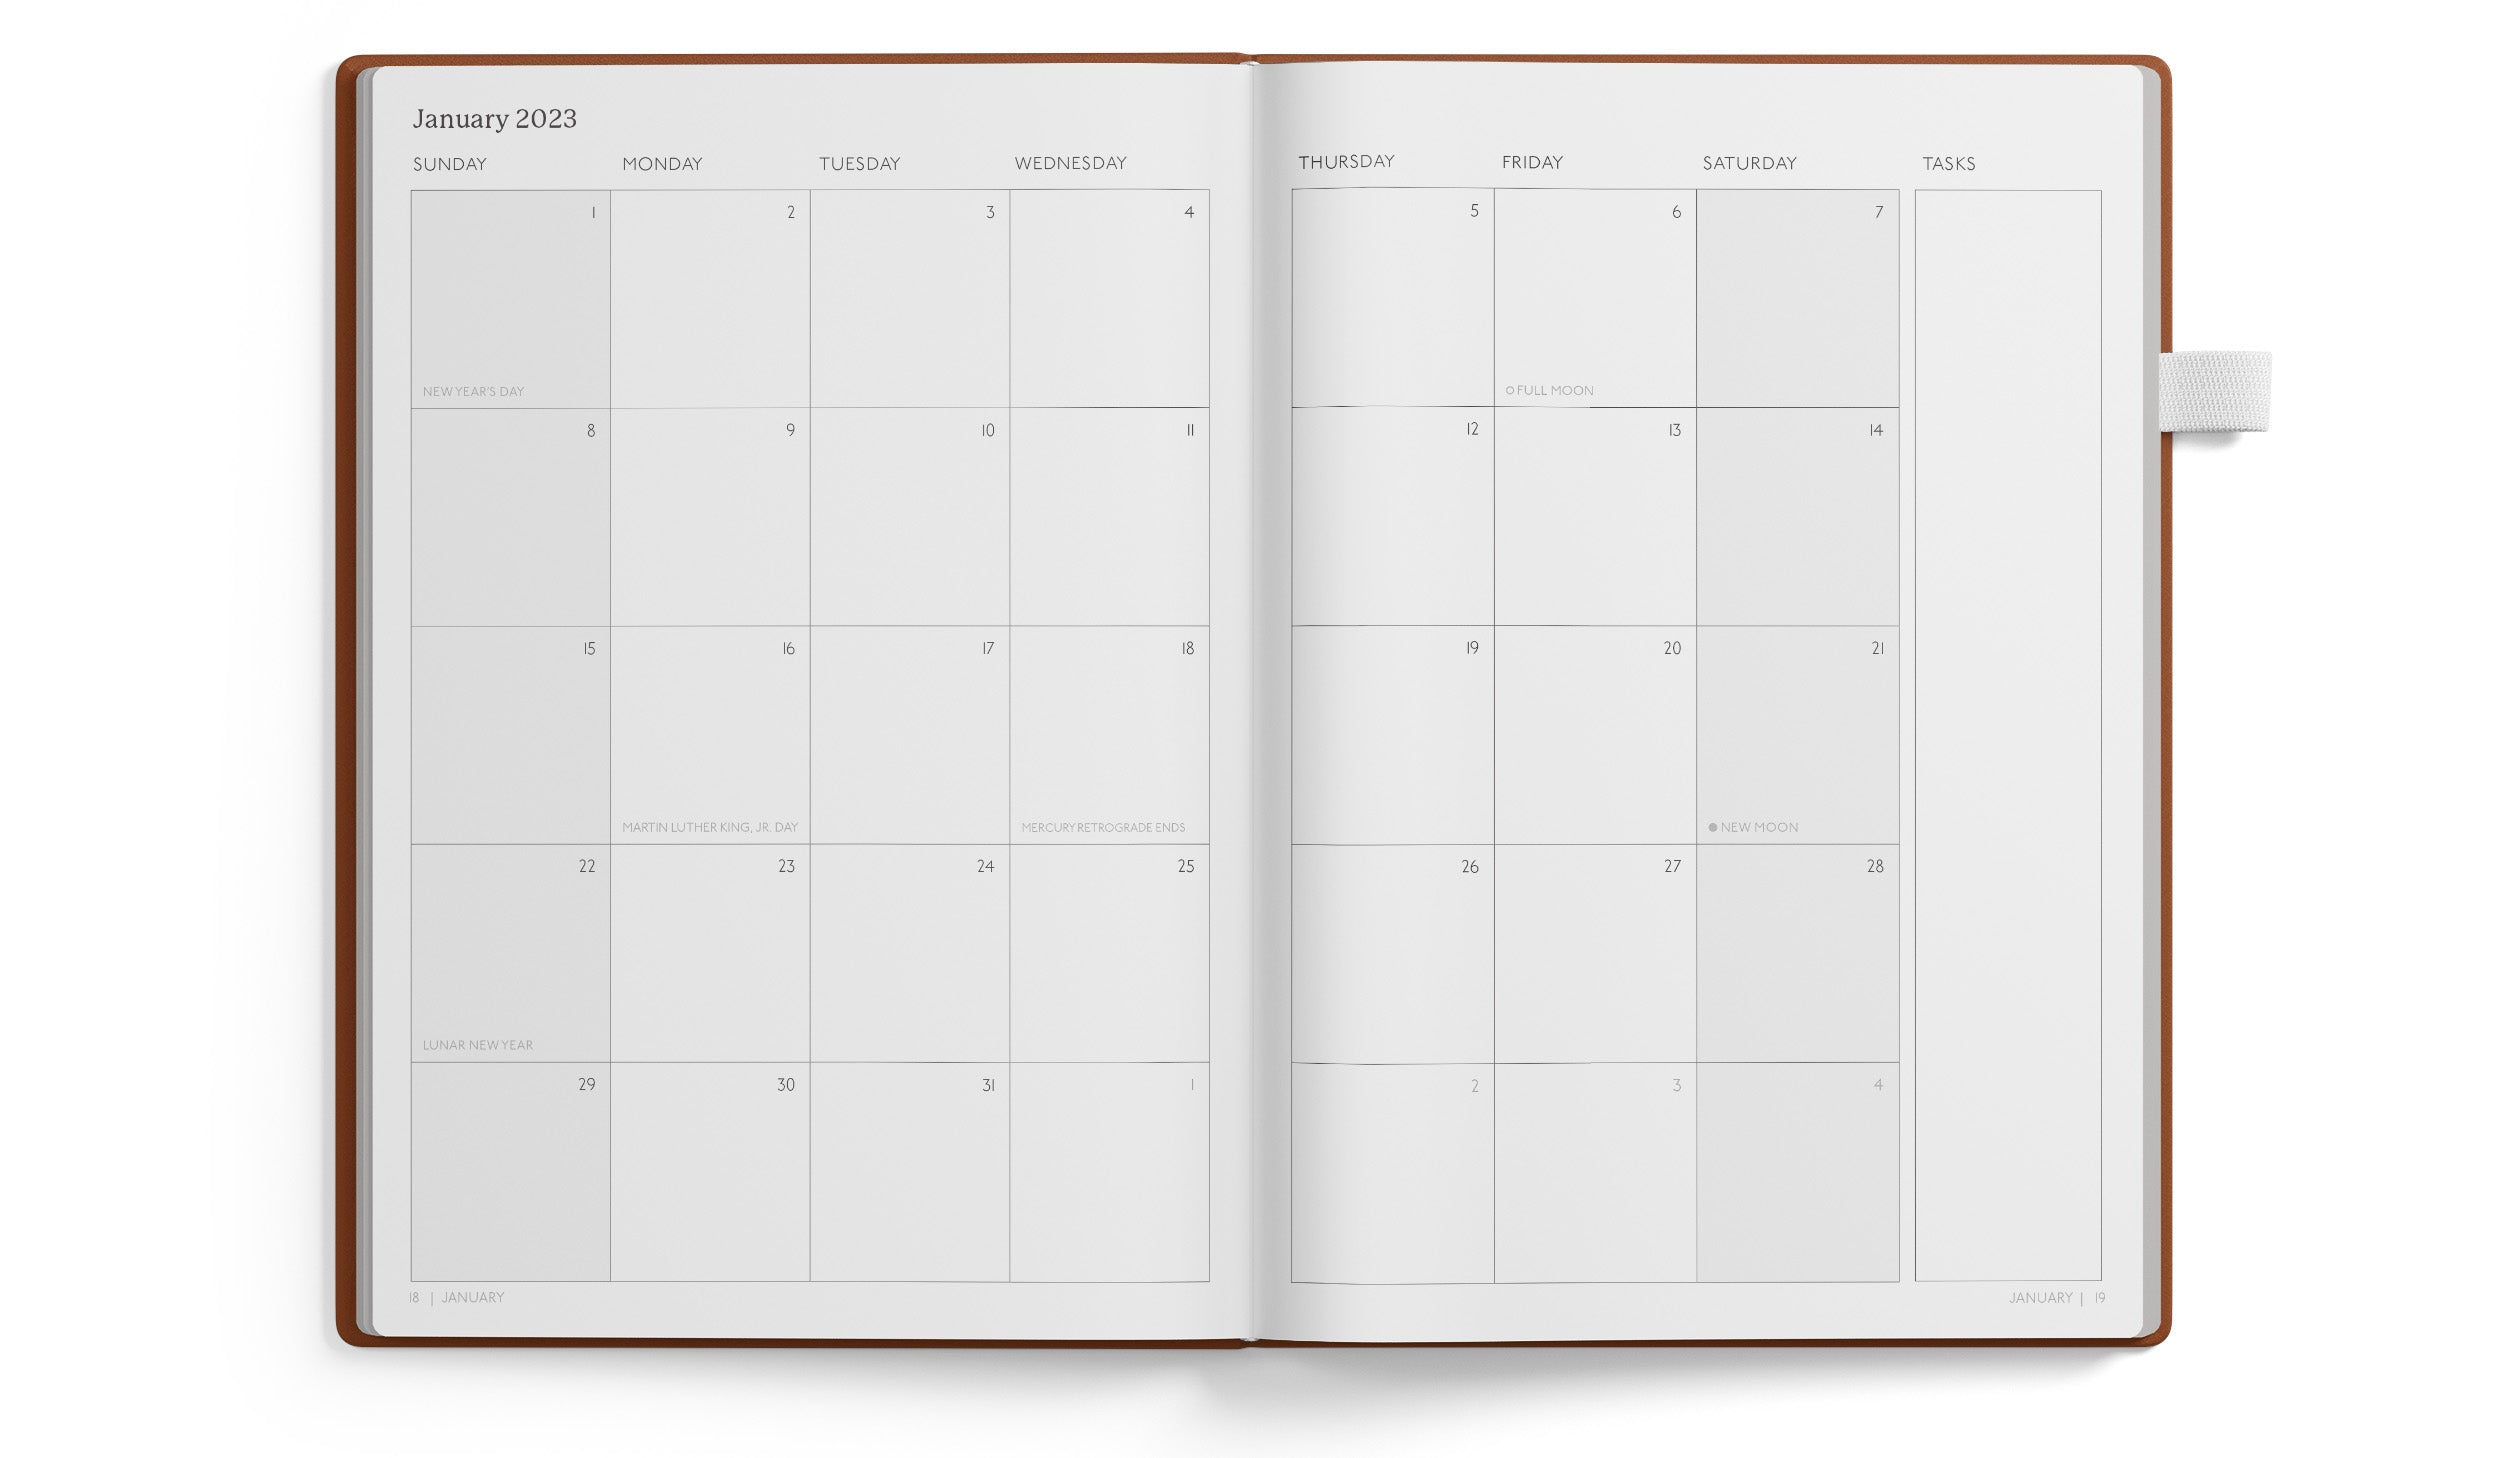 No Limits Planner - Monthly Calendar - Goal Setting Planner for Entrepreneurs